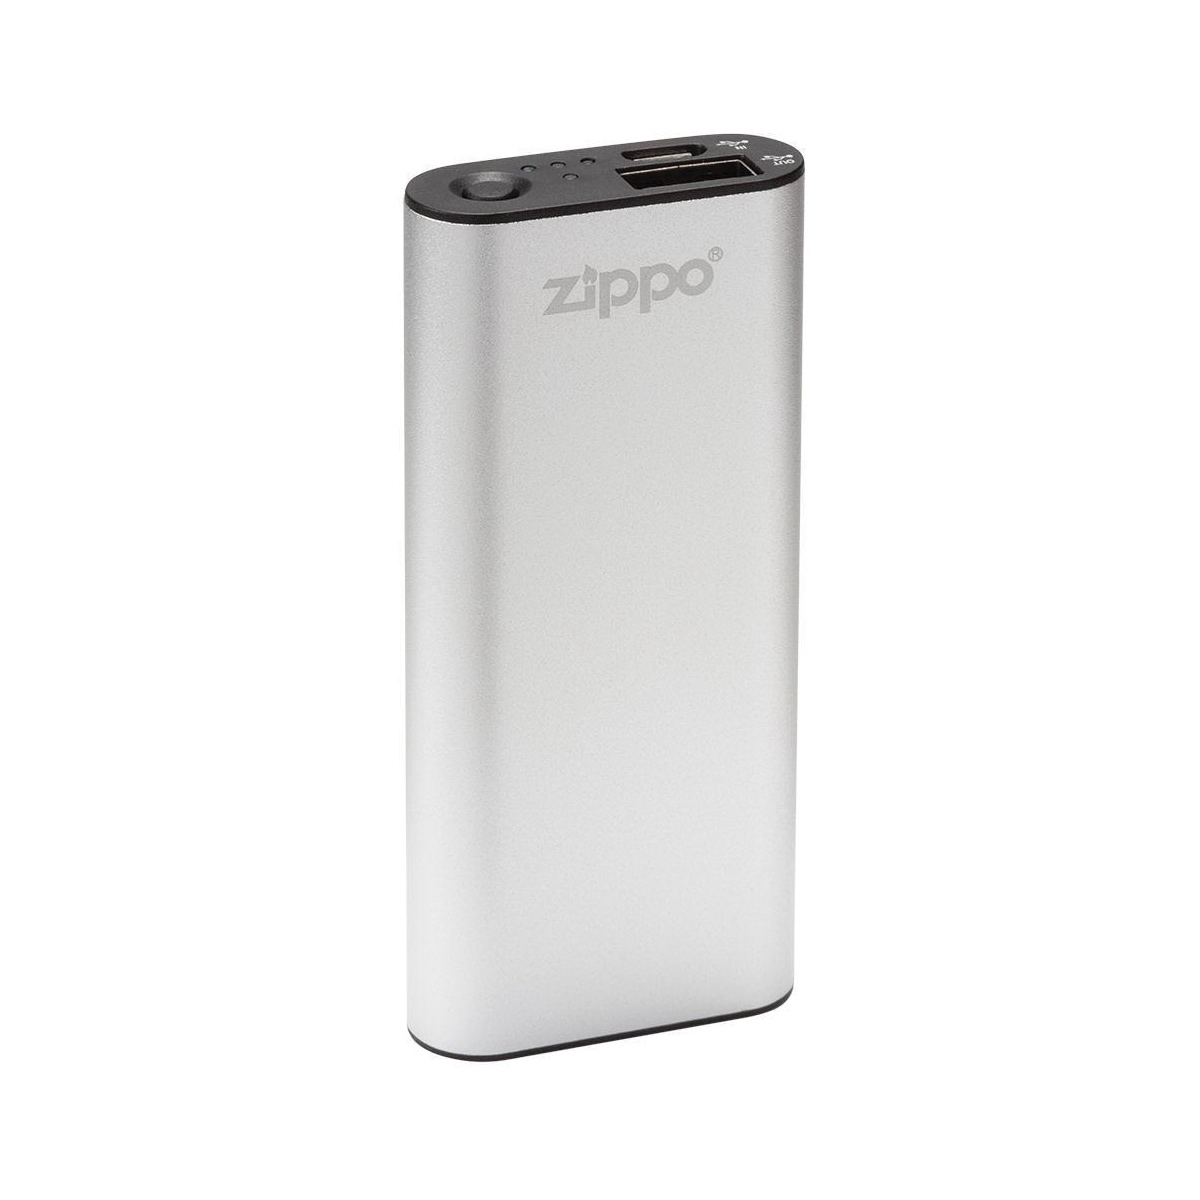 Zippo Heat Bank Hand Warmer and Power Bank - 1